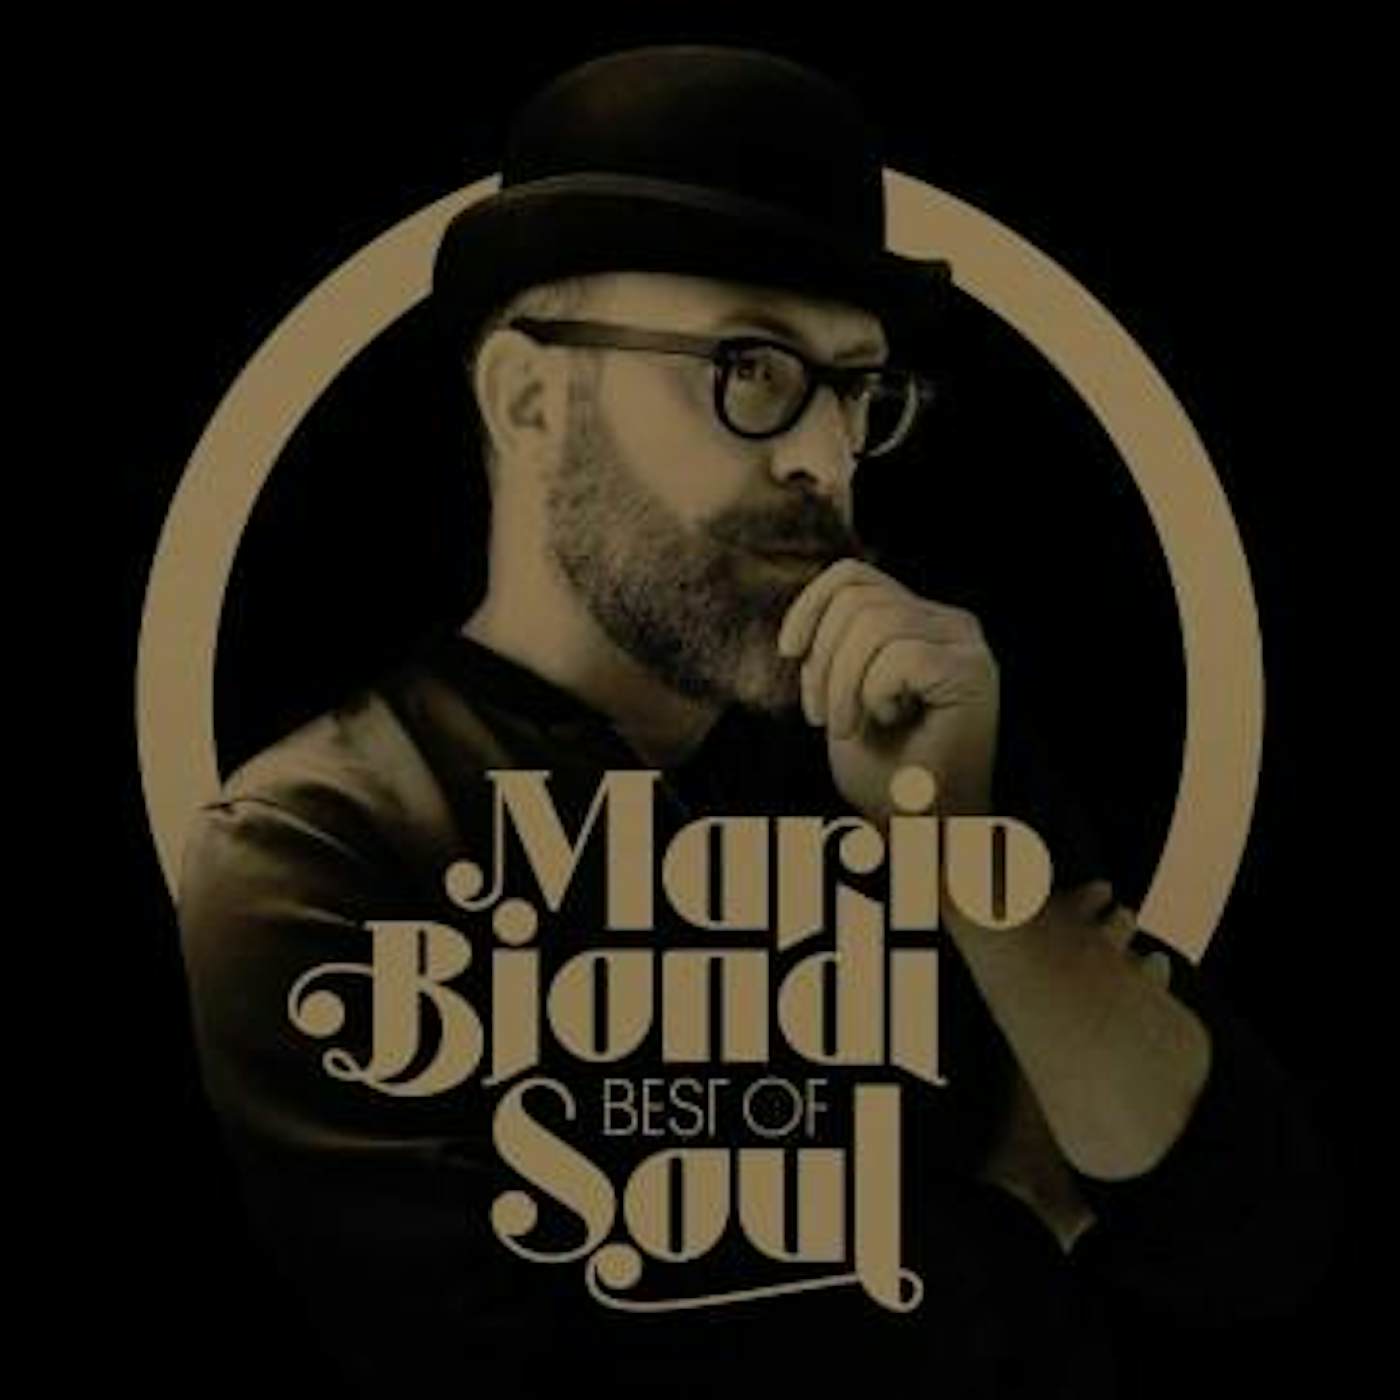 Mario Biondi BEST OF SOUL CD